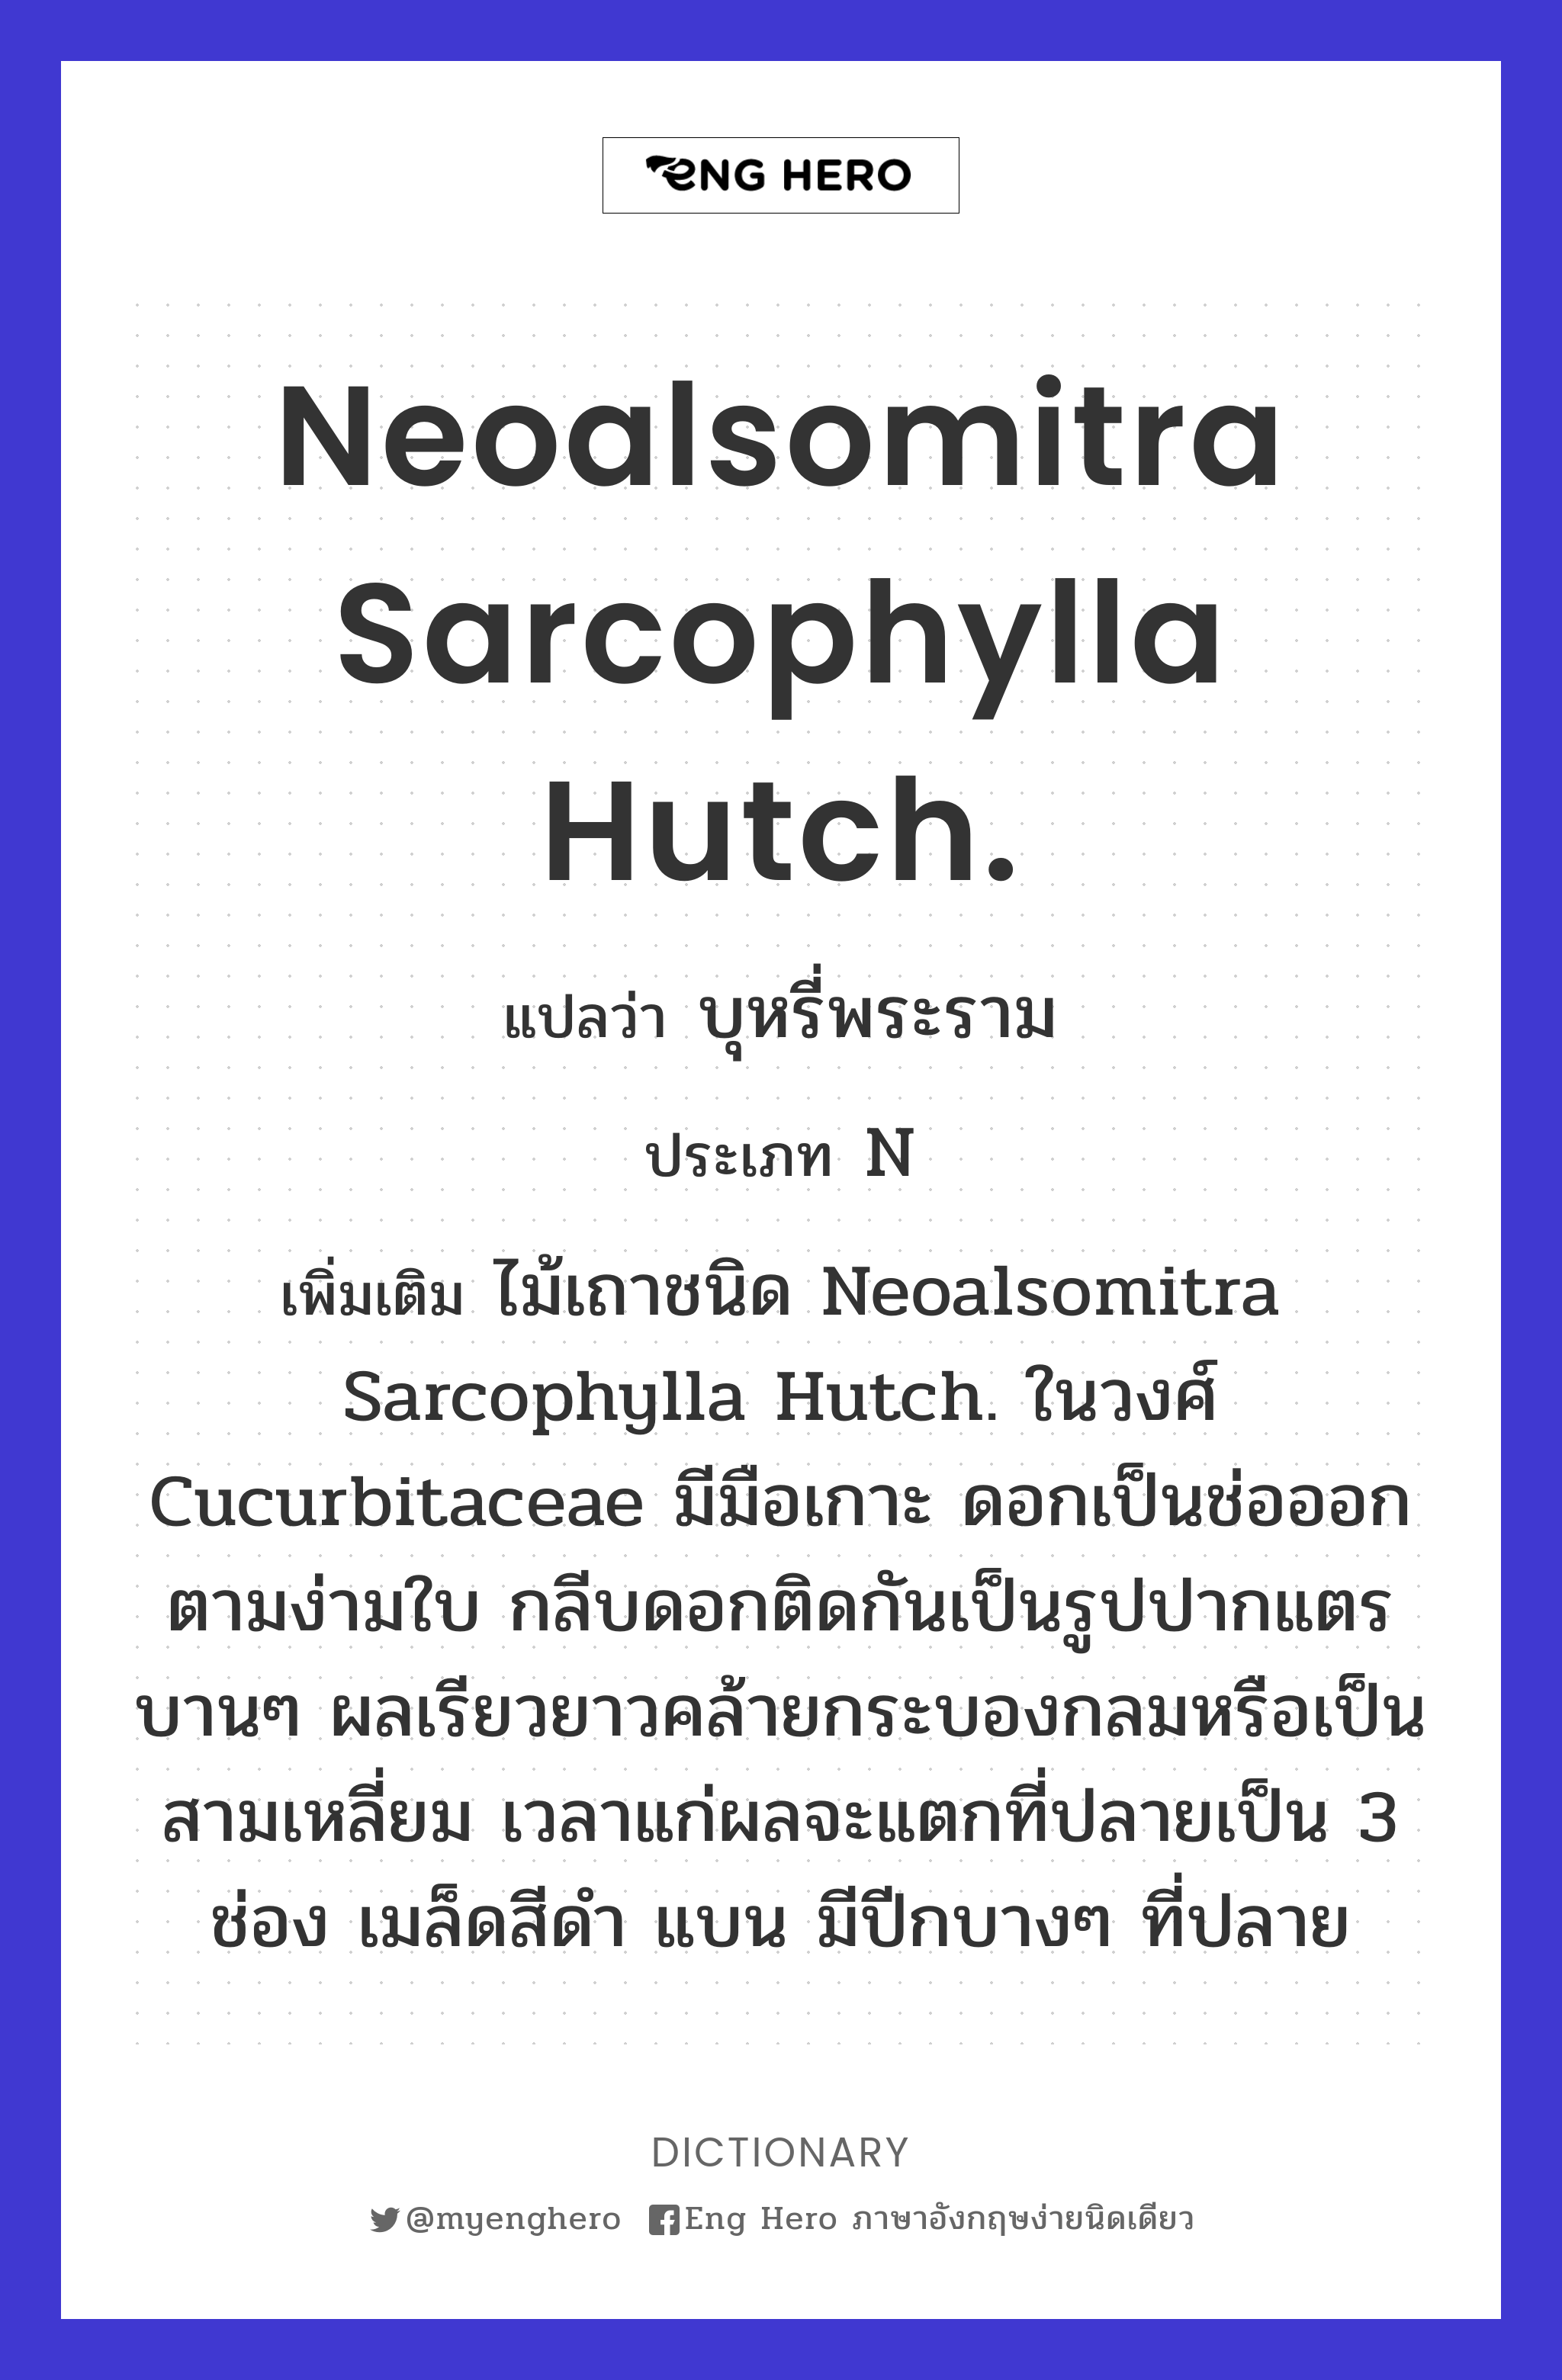 Neoalsomitra sarcophylla Hutch.